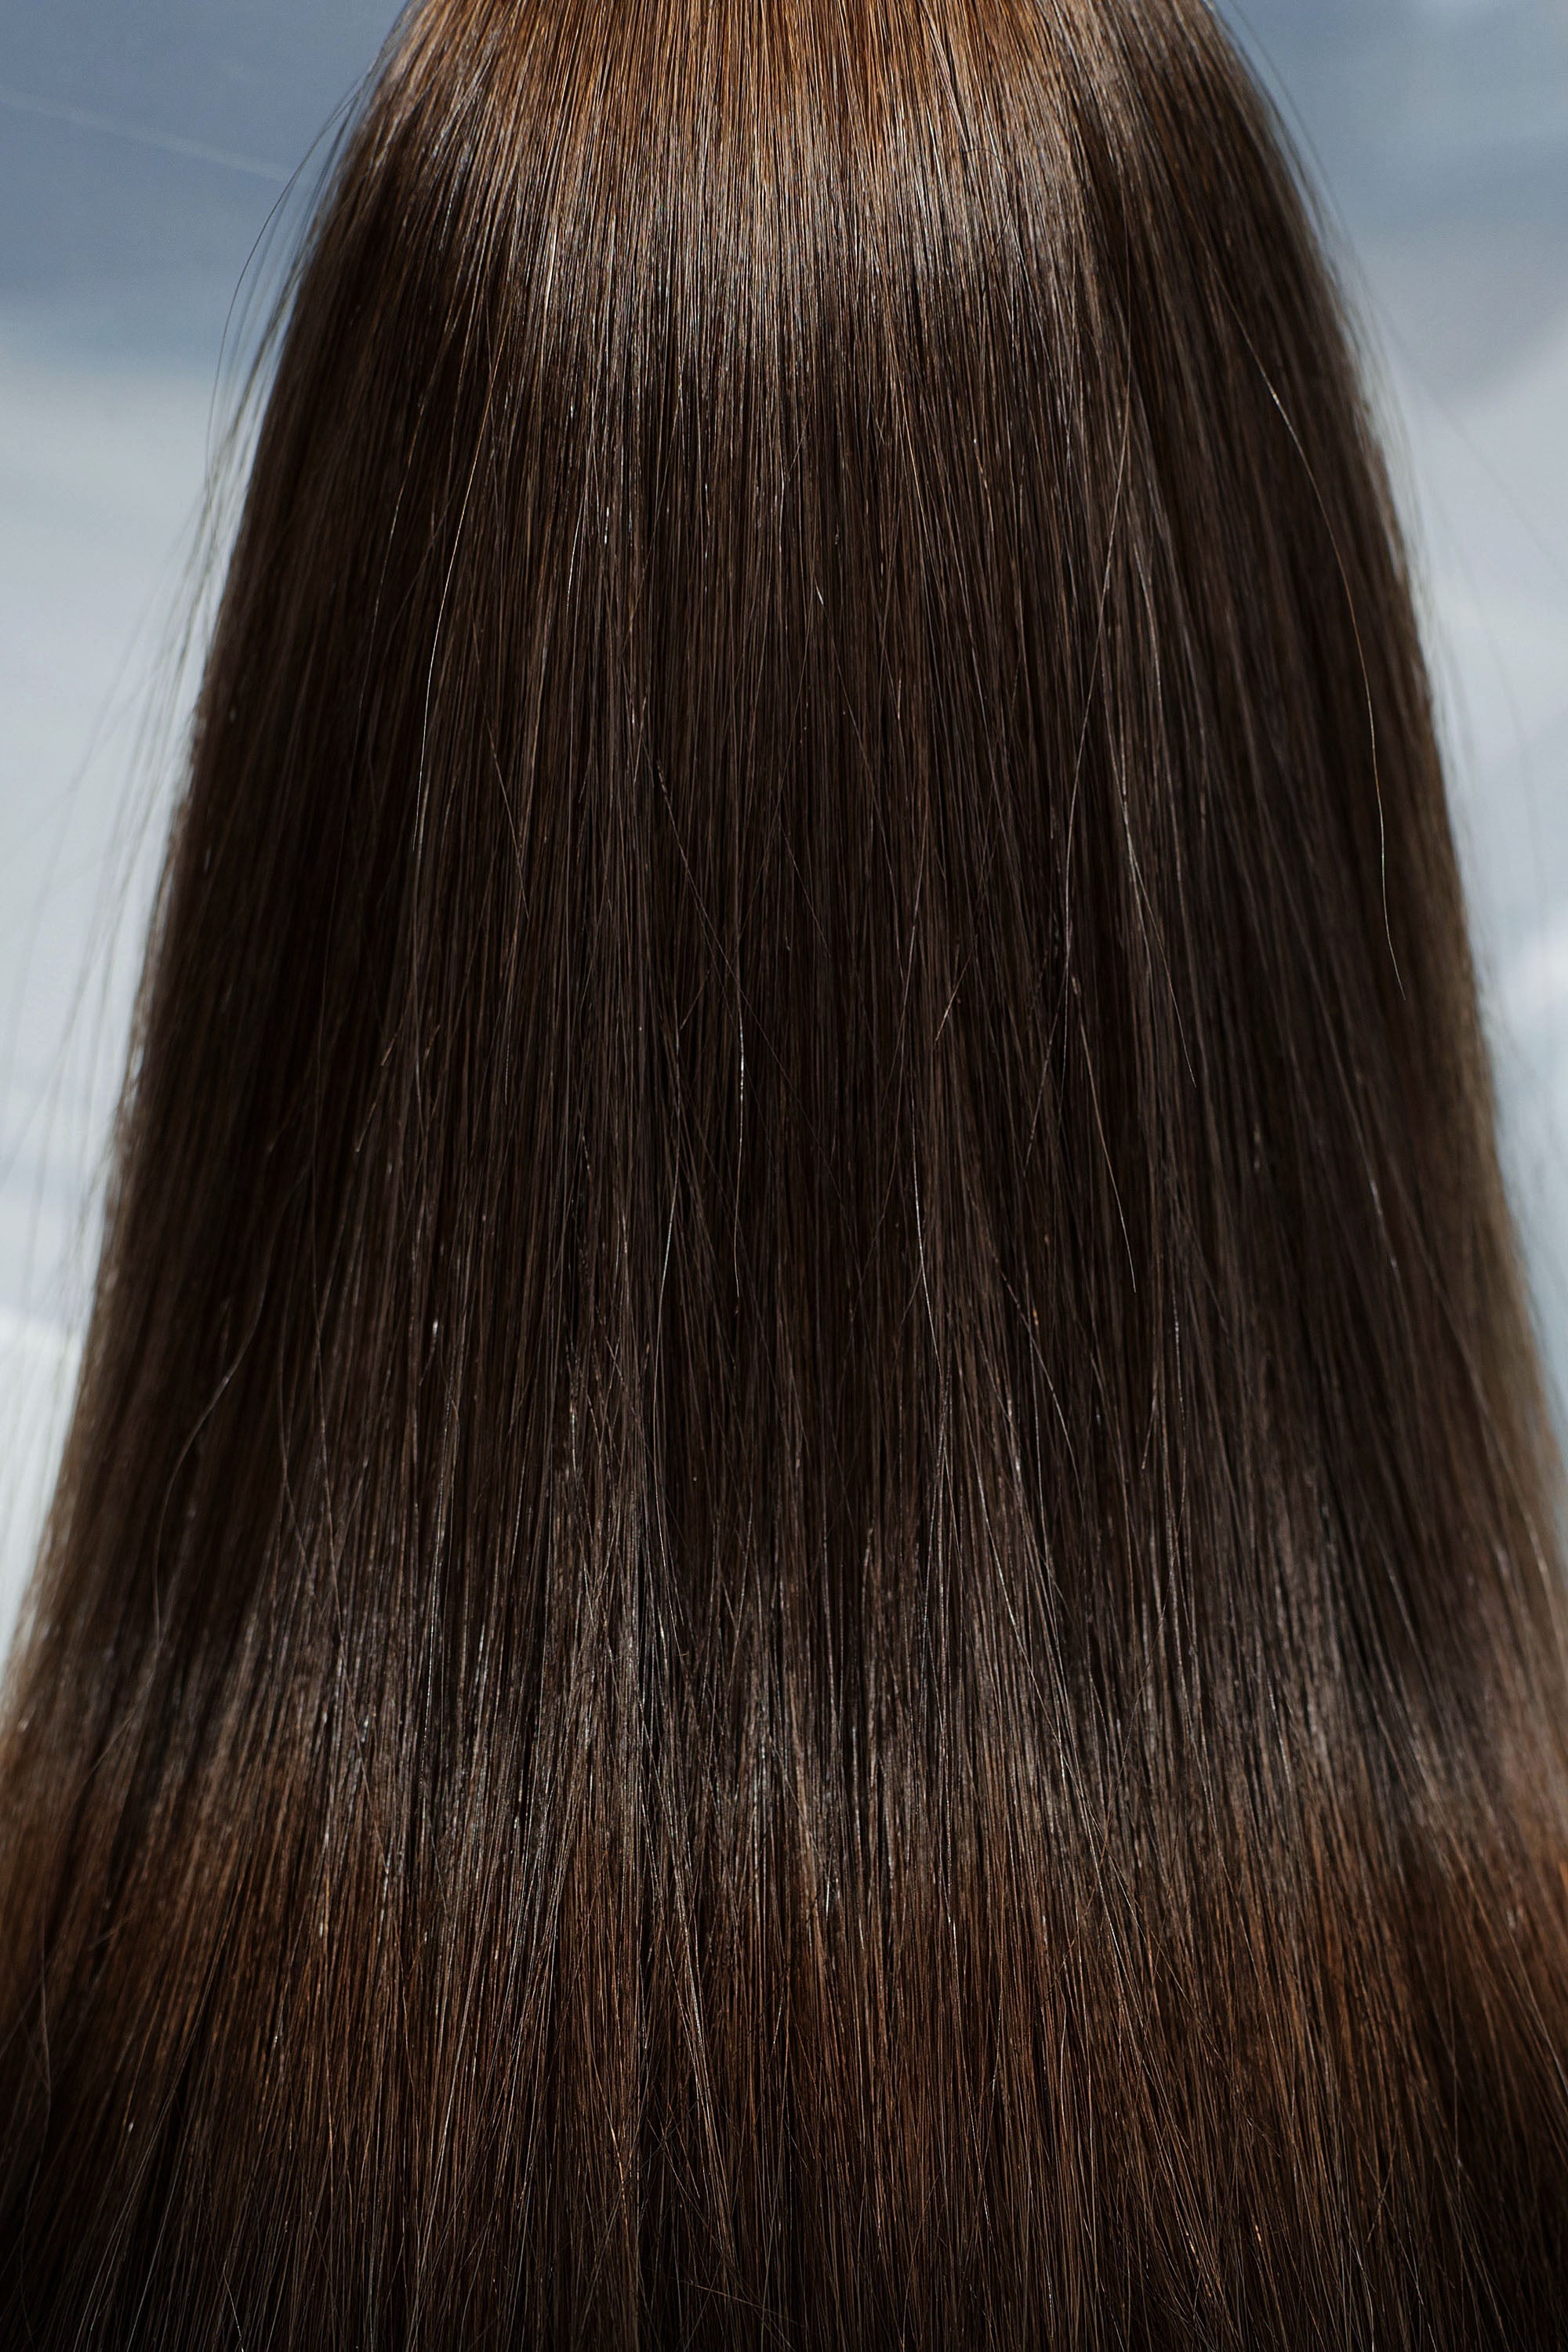 Behair professional Keratin Tip "Premium" 16" (40cm) Natural Straight Light Brown #4 - 25g (1g each pcs) hair extensions